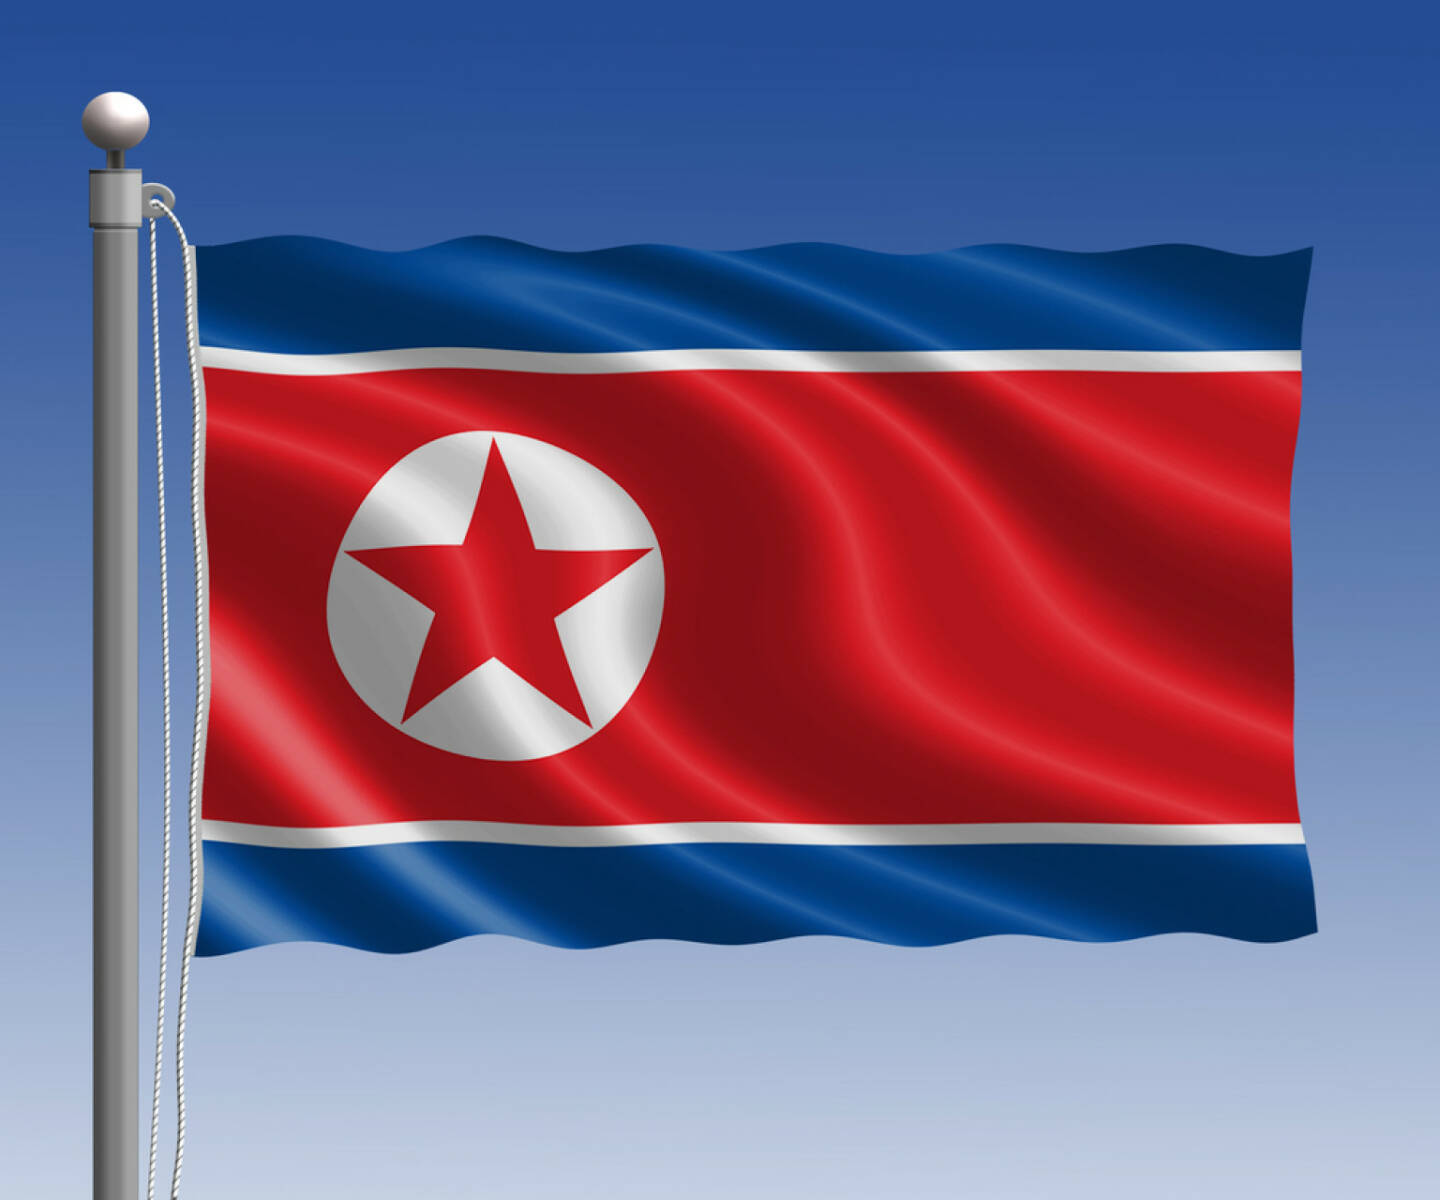 Nordkorea, Flagge, Fahne, http://www.shutterstock.com/de/pic-250805506/stock-photo-north-korea-flag-in-pole-on-blue-sky-background.html